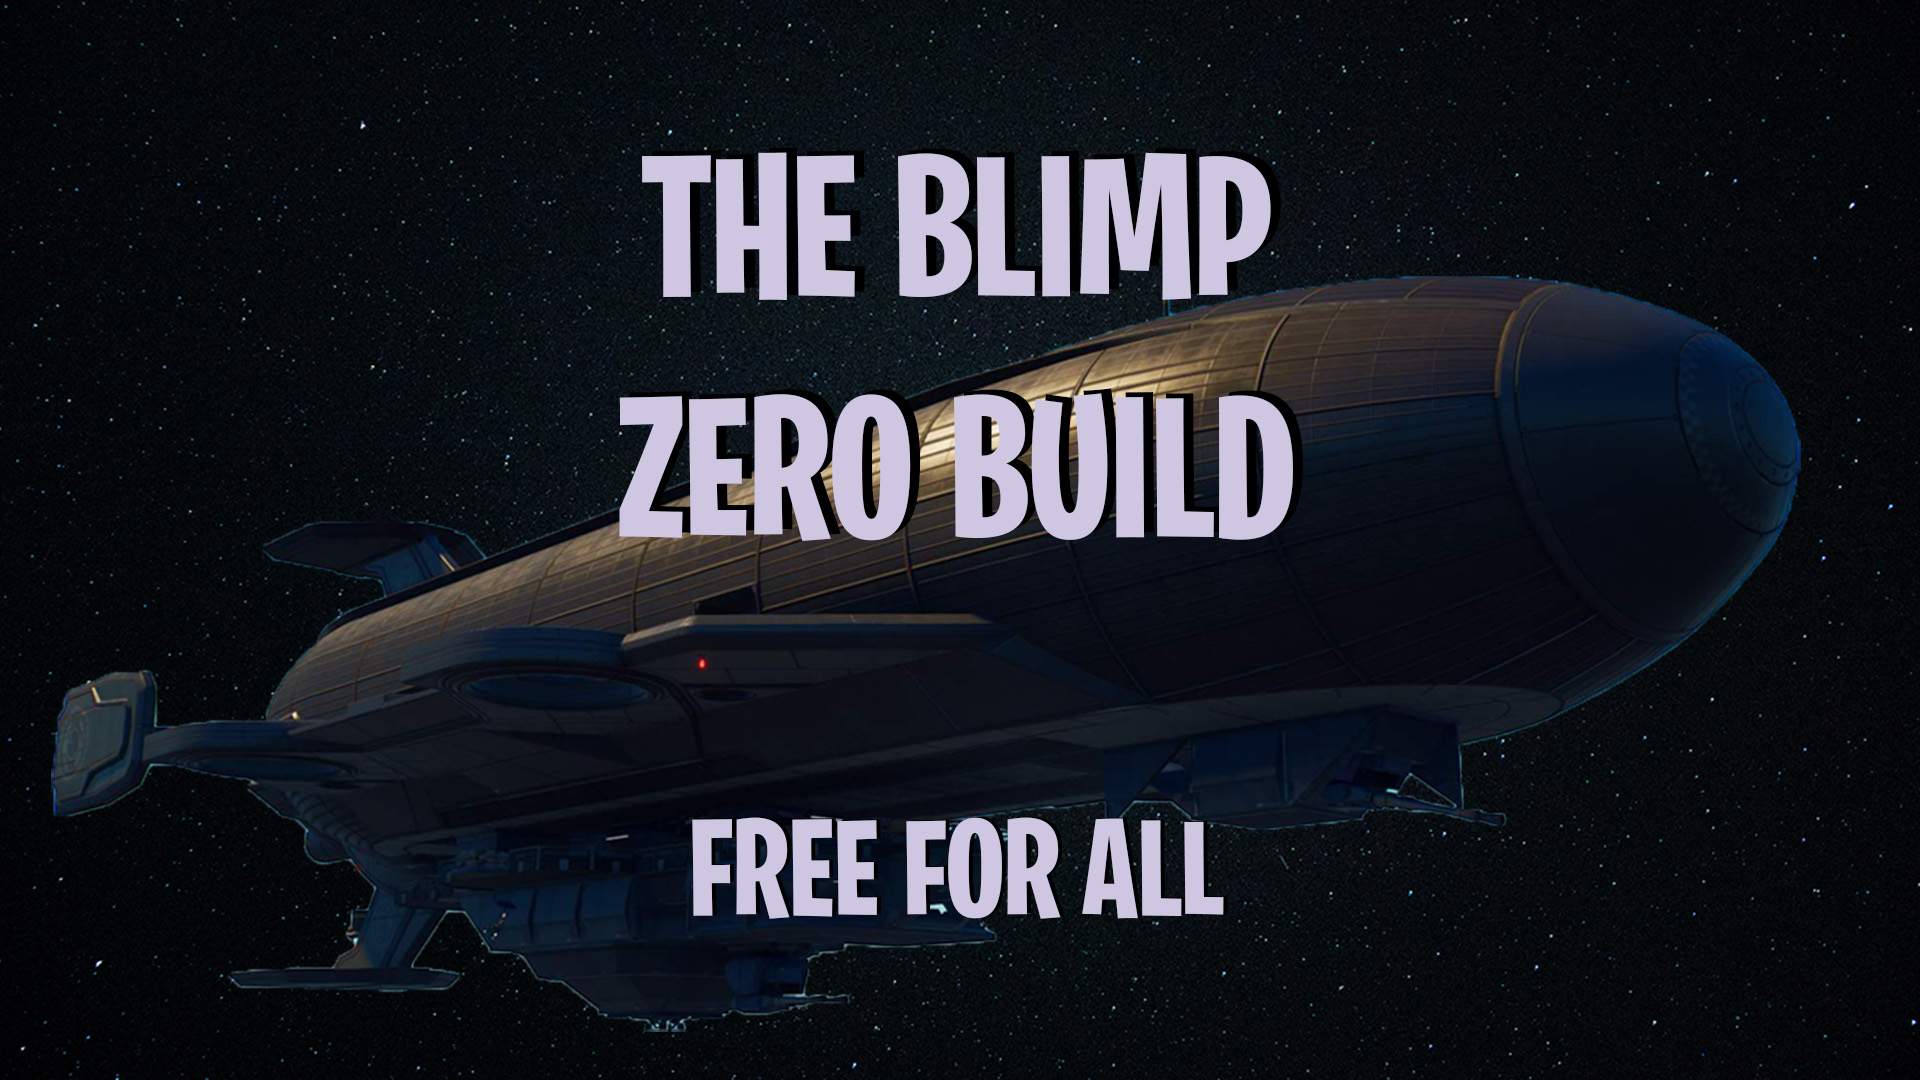 Zero Build FFA - The Blimp